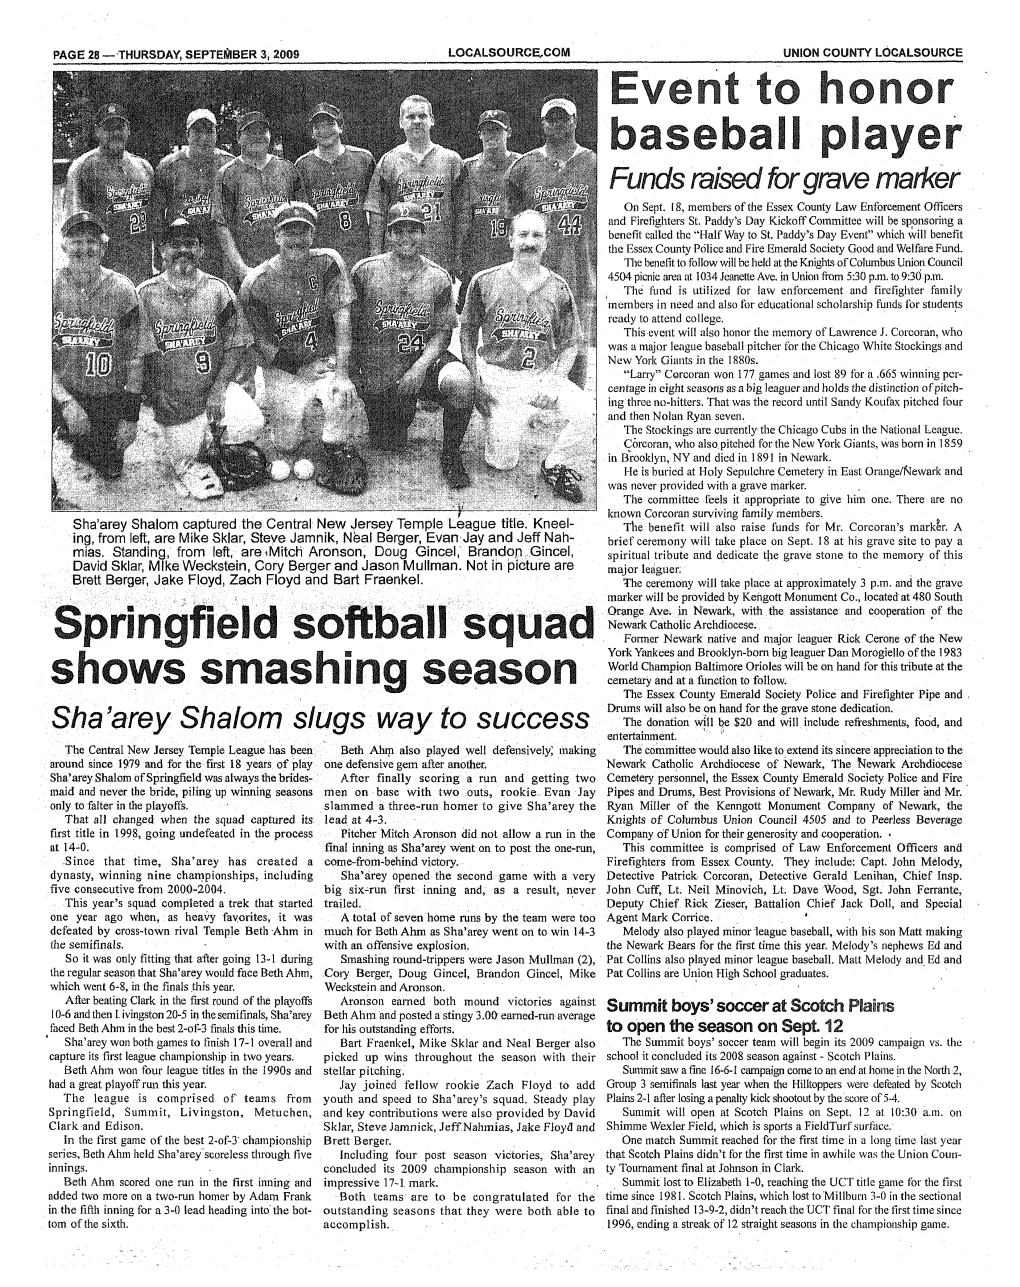 Springfield Softhall Squad Shows Smashing Season Event to Honor